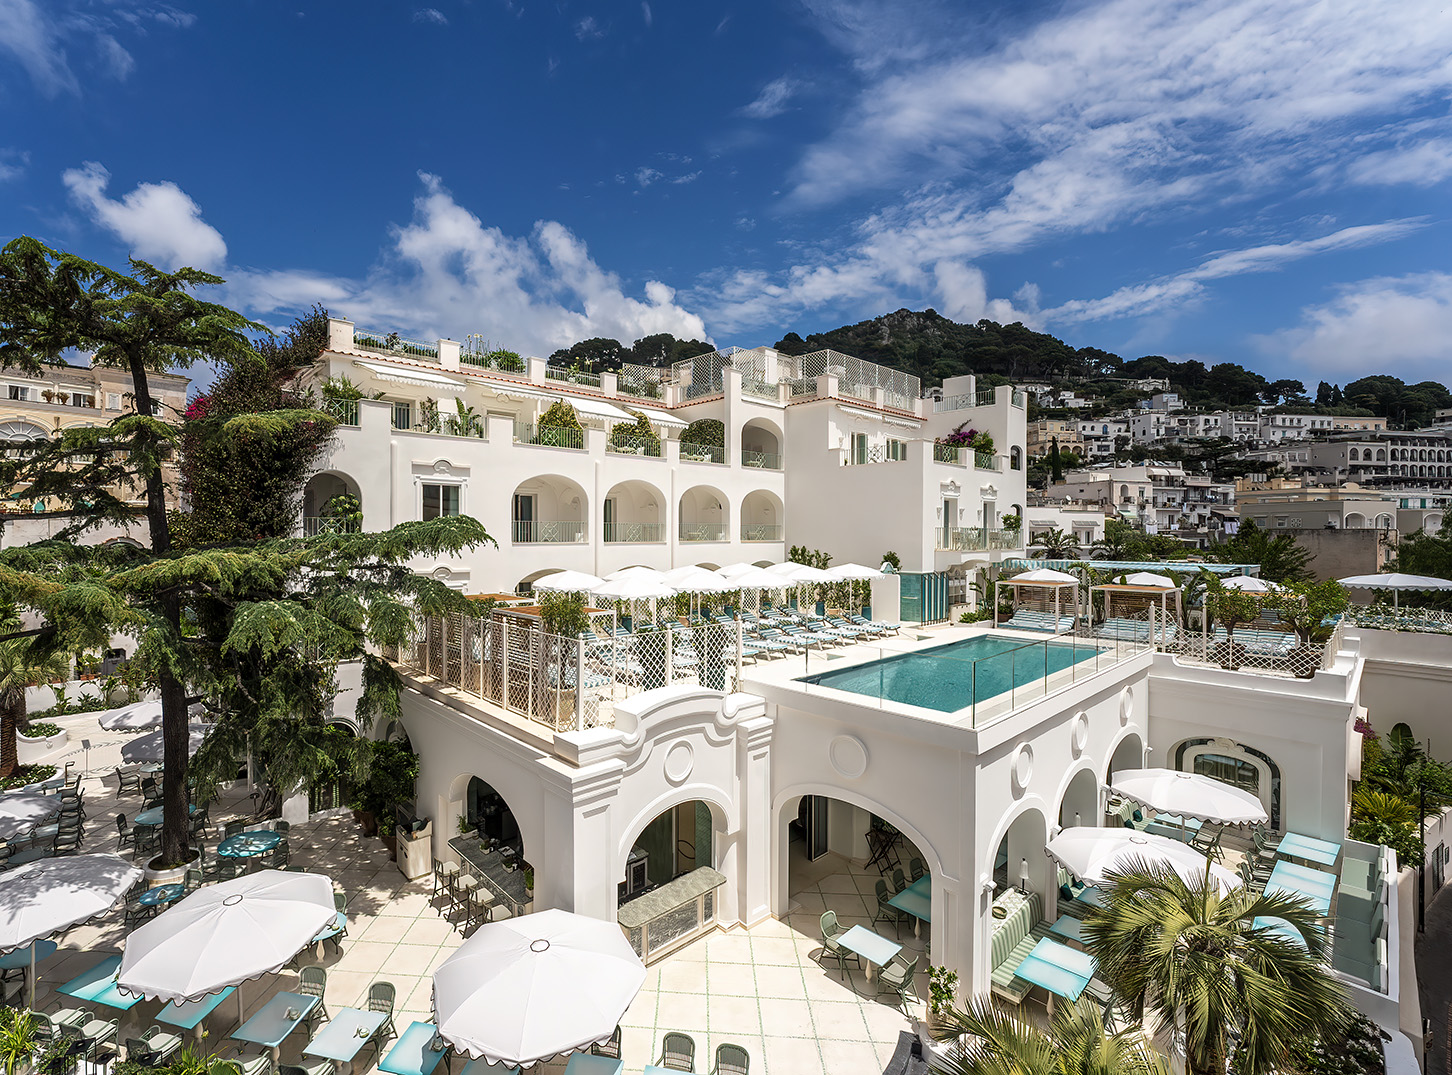 Oetker Hotel La Palma